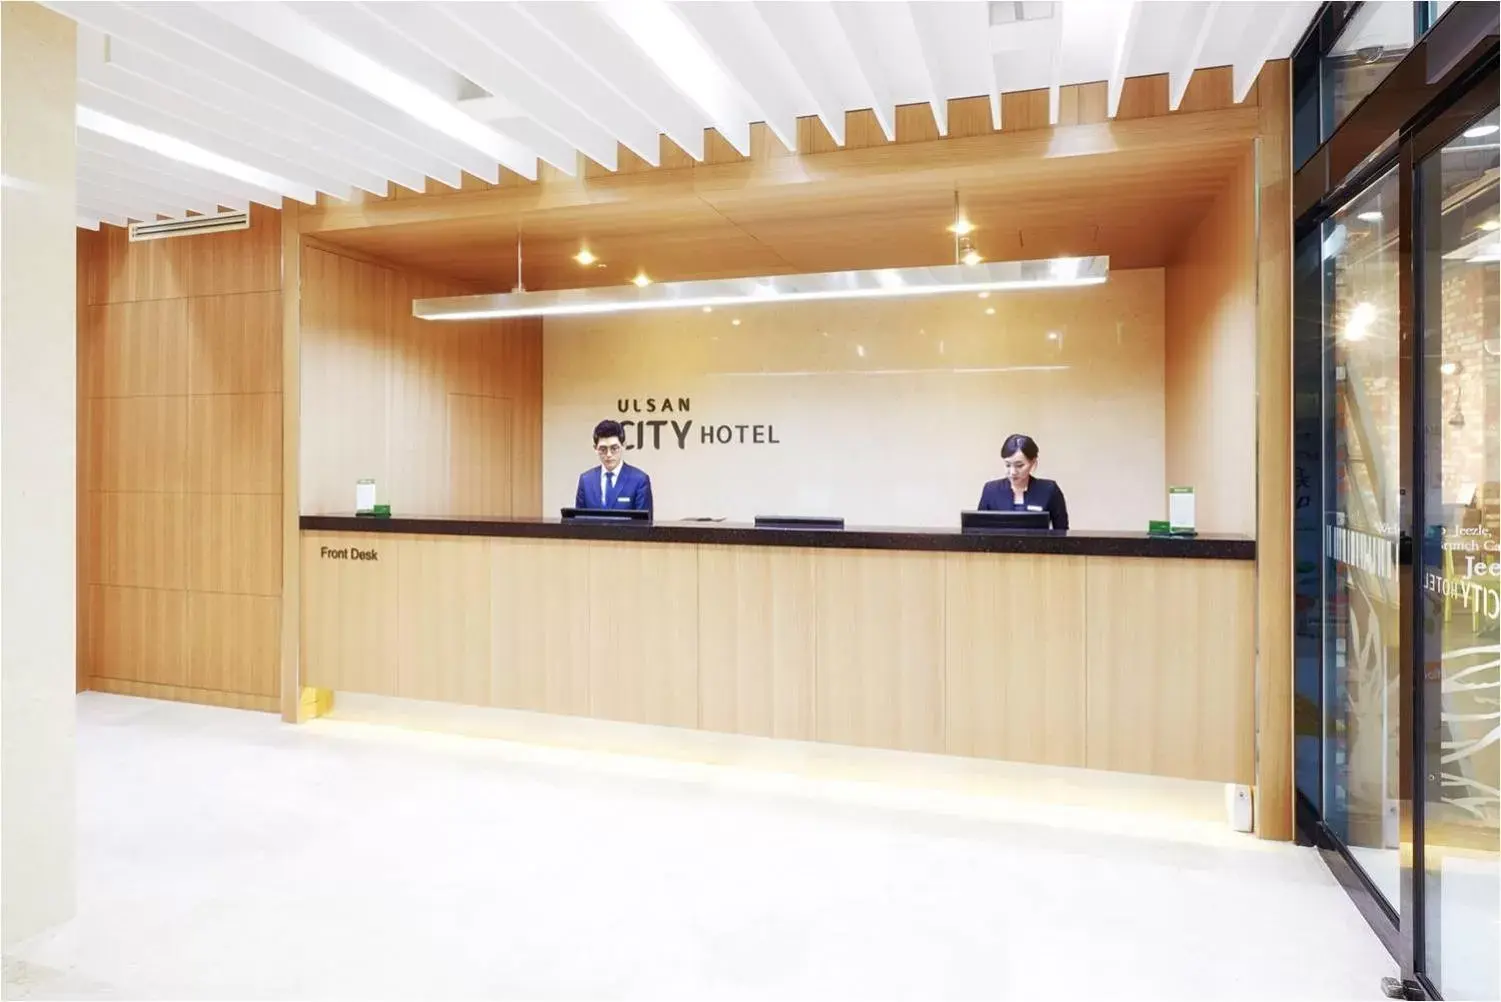 Lobby or reception, Lobby/Reception in Ulsan City Hotel